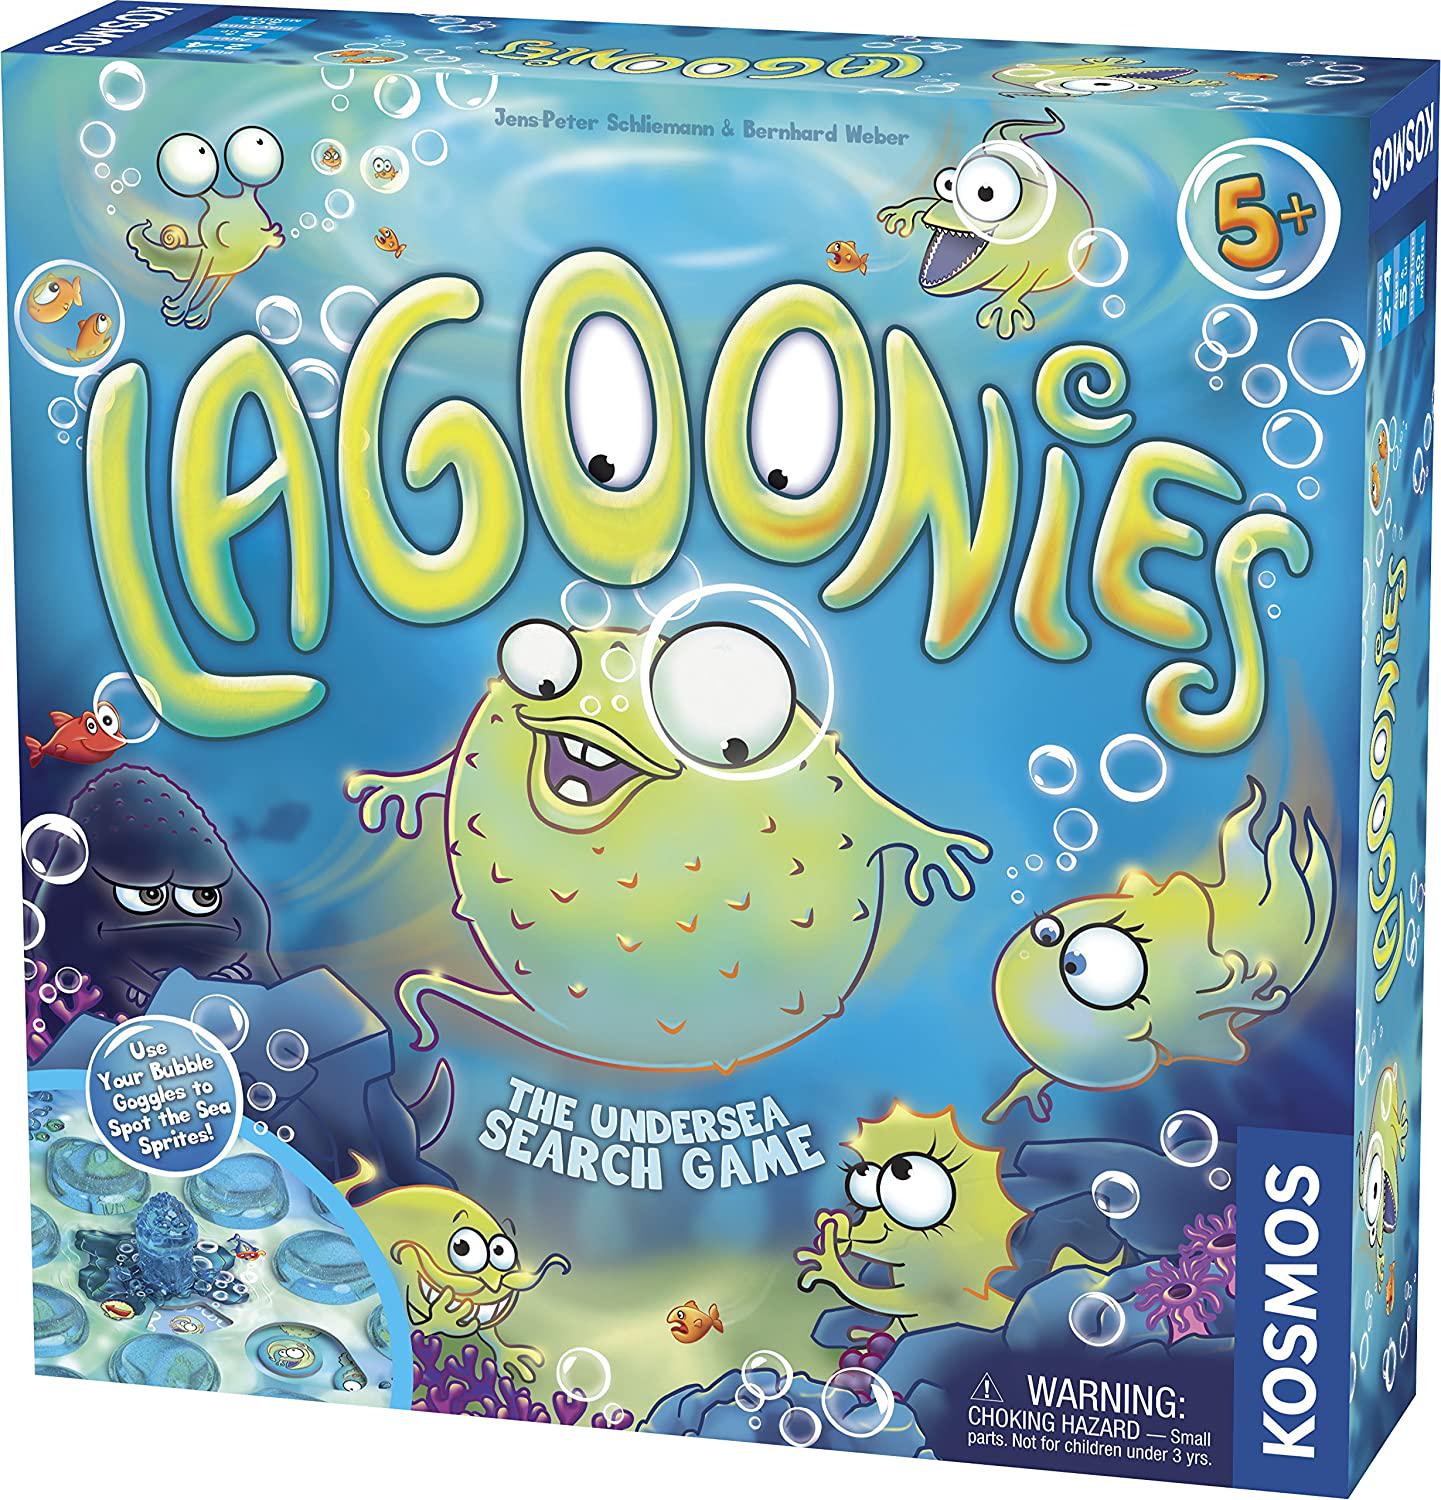 THAMES & KOSMOS, Lagoonies Board Game